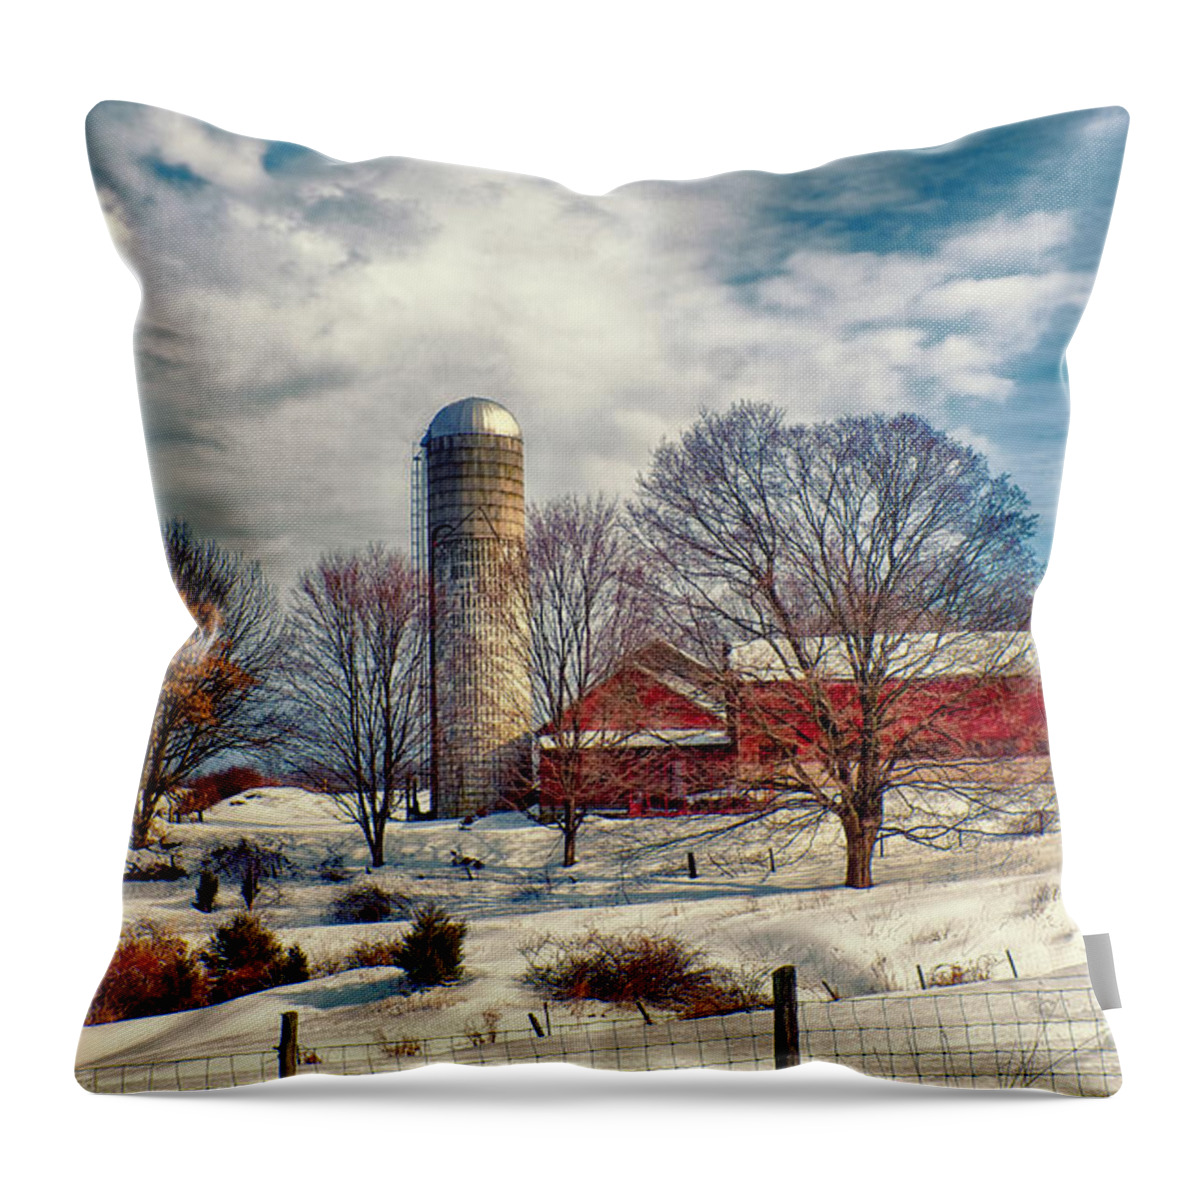 Farm Throw Pillow featuring the photograph Winter Farm by Mark Miller